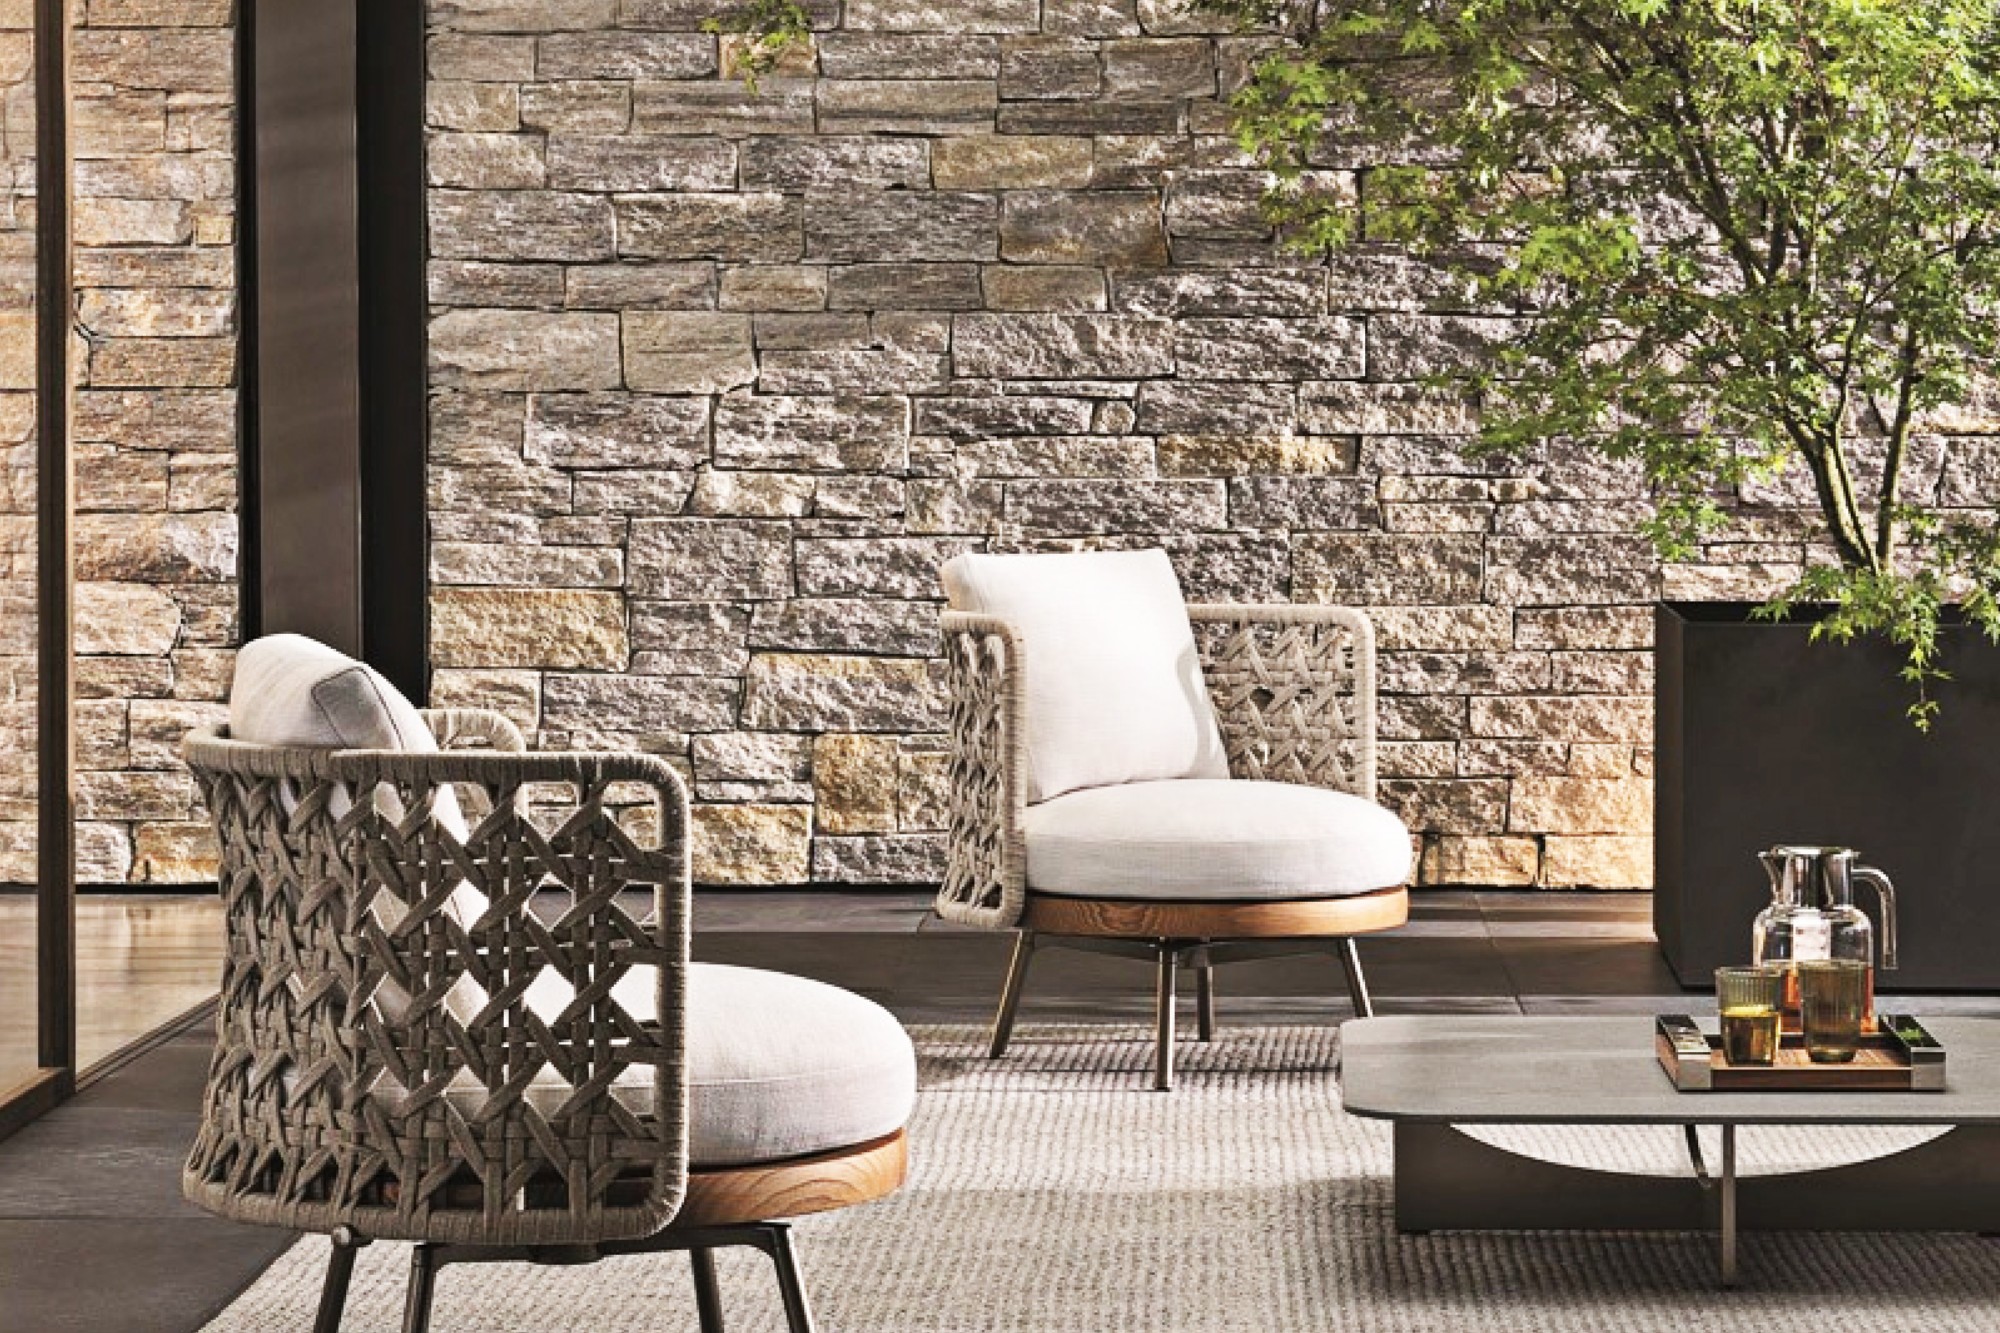 Rococo Milano unveils modern outdoor furniture